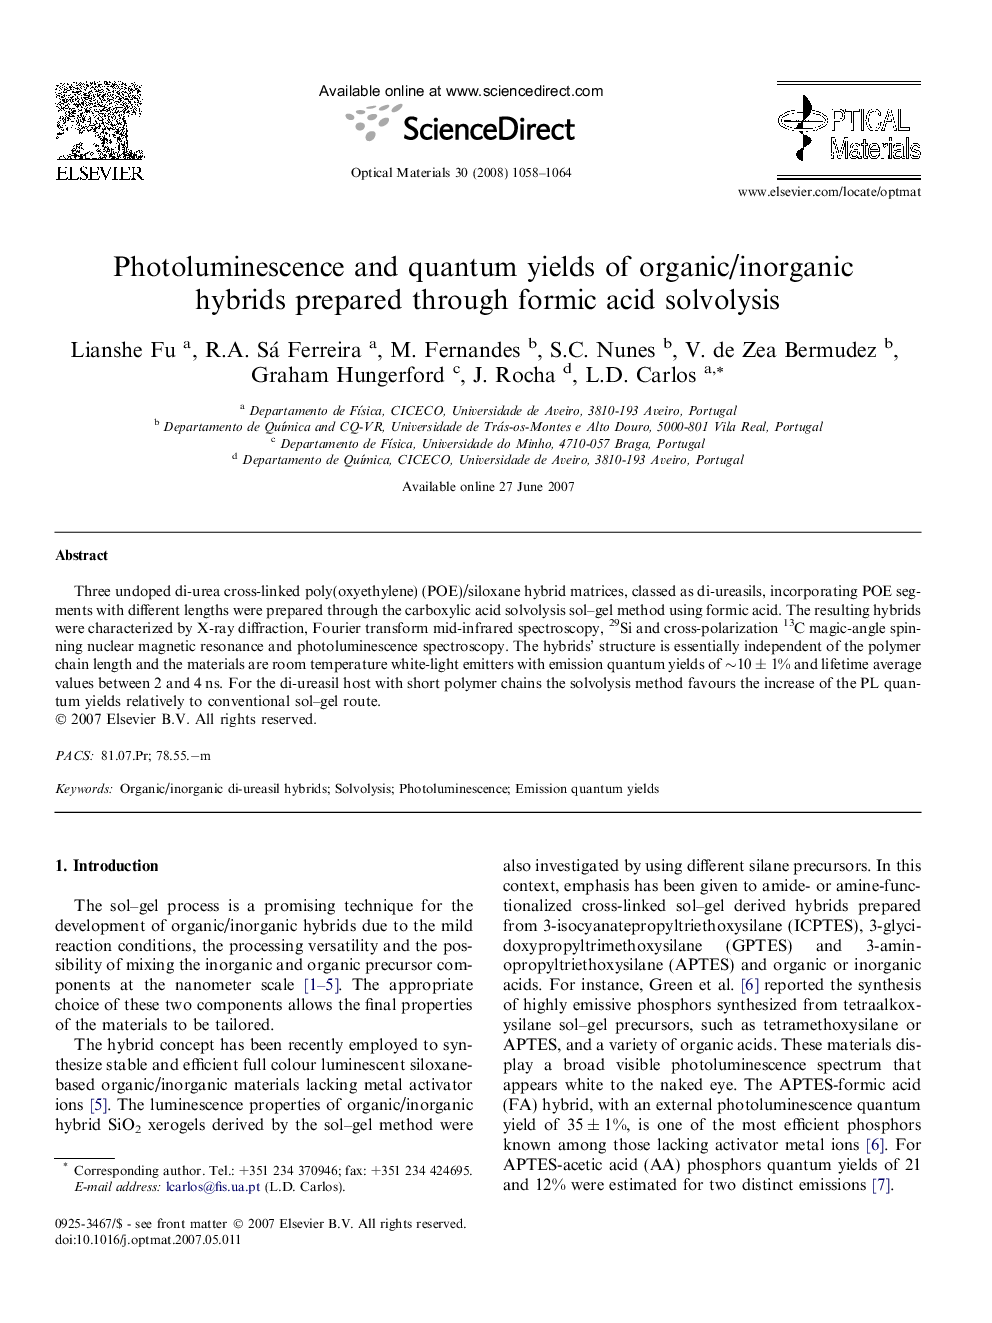 Photoluminescence and quantum yields of organic/inorganic hybrids prepared through formic acid solvolysis